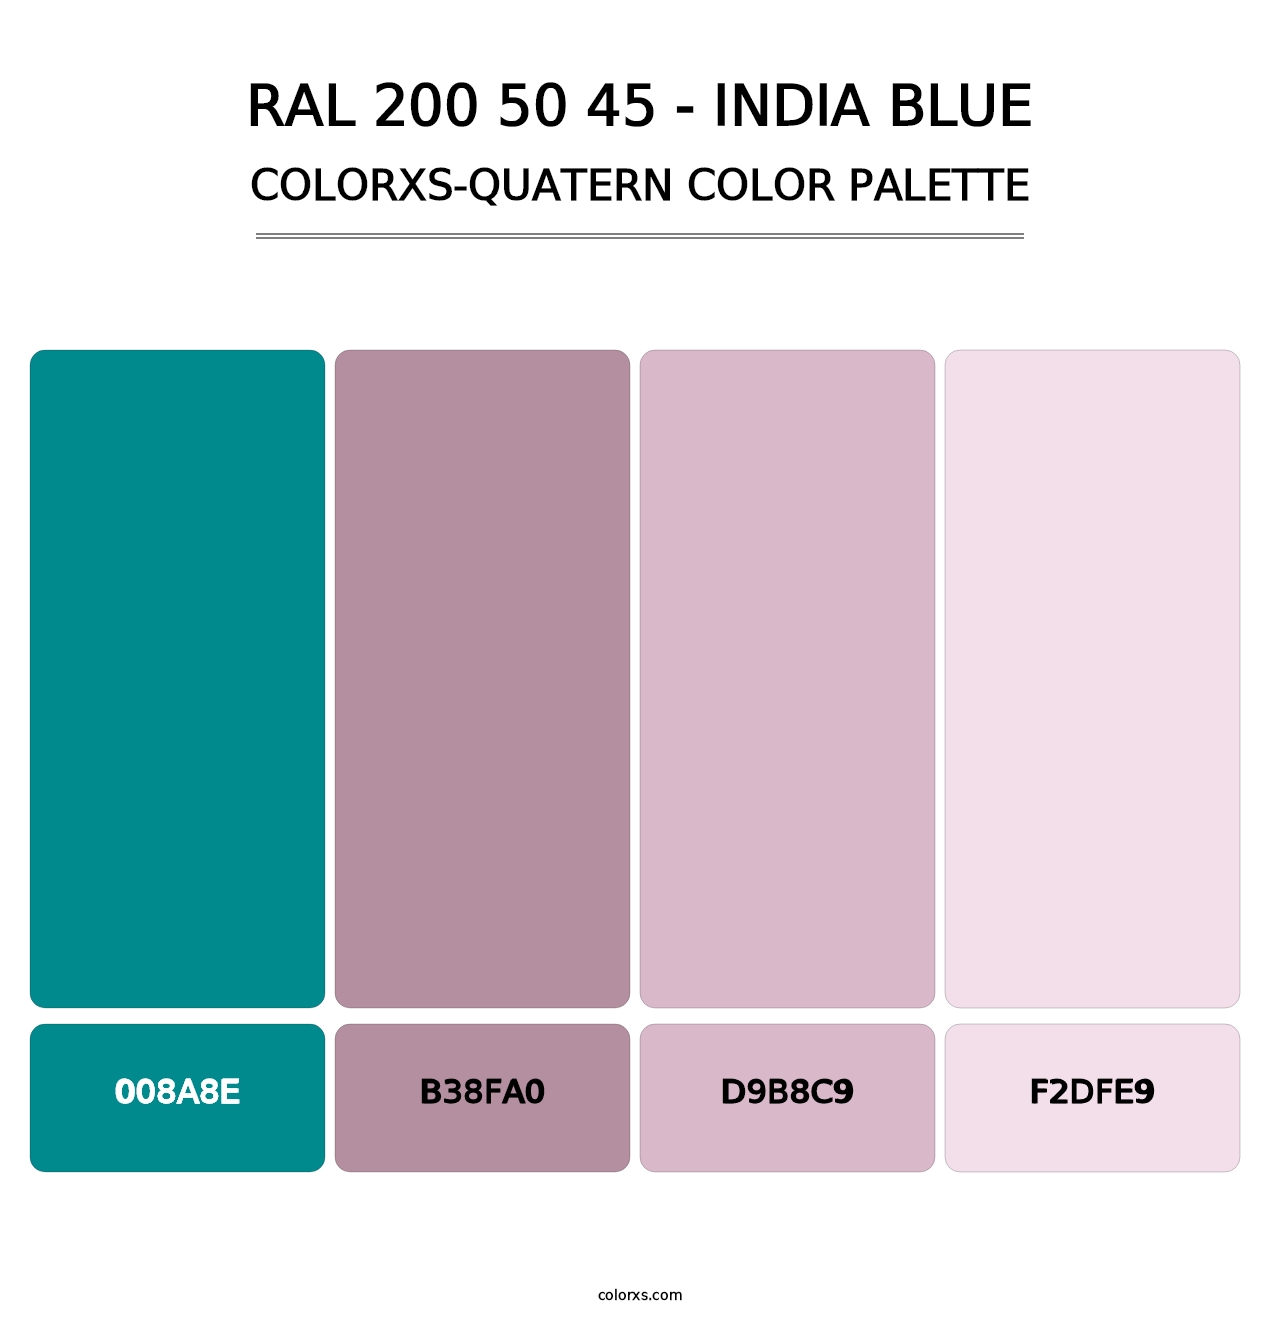 RAL 200 50 45 - India Blue - Colorxs Quatern Palette